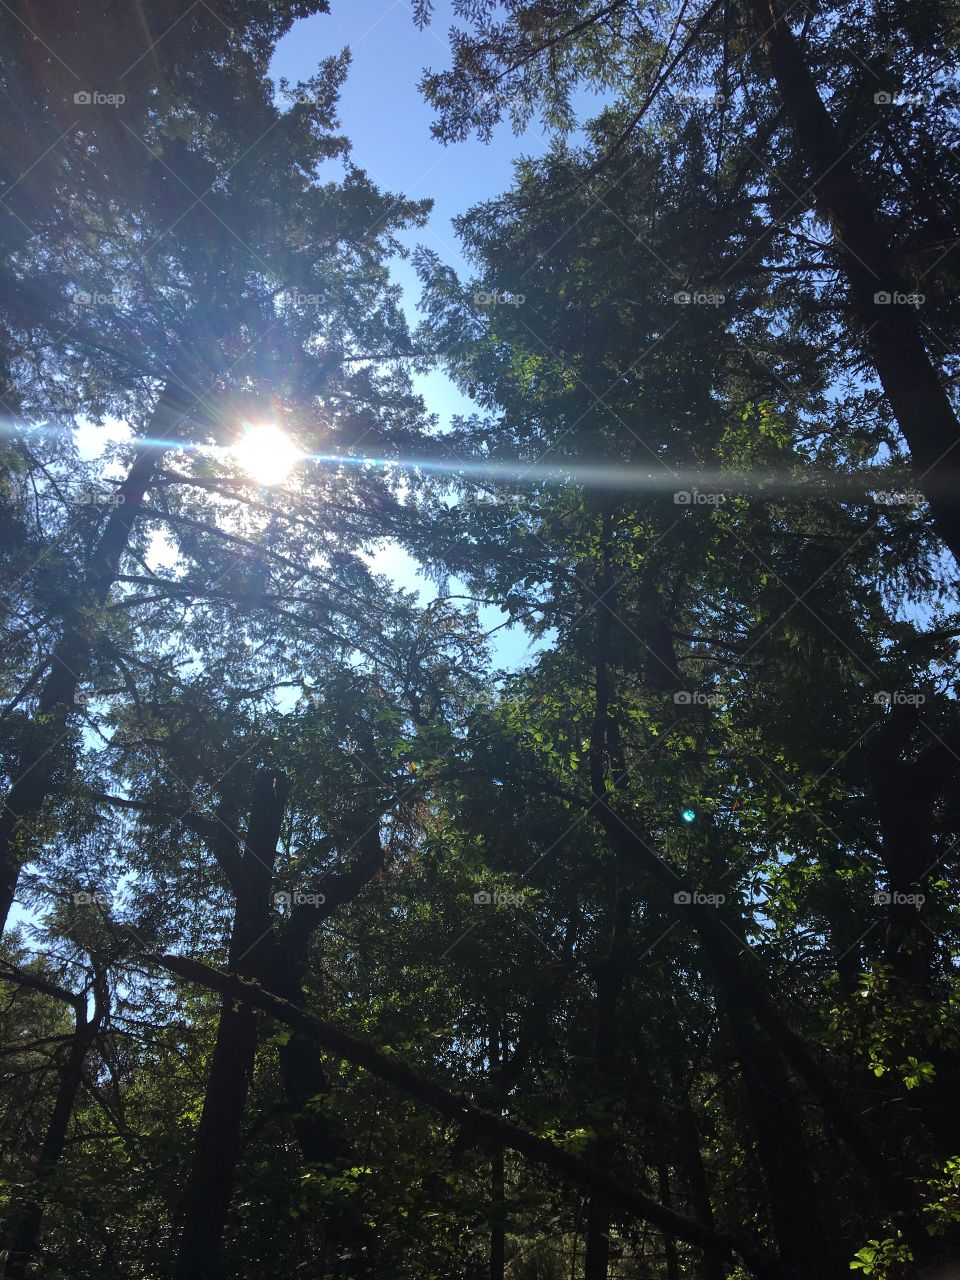 Light shines down through the tall, green trees